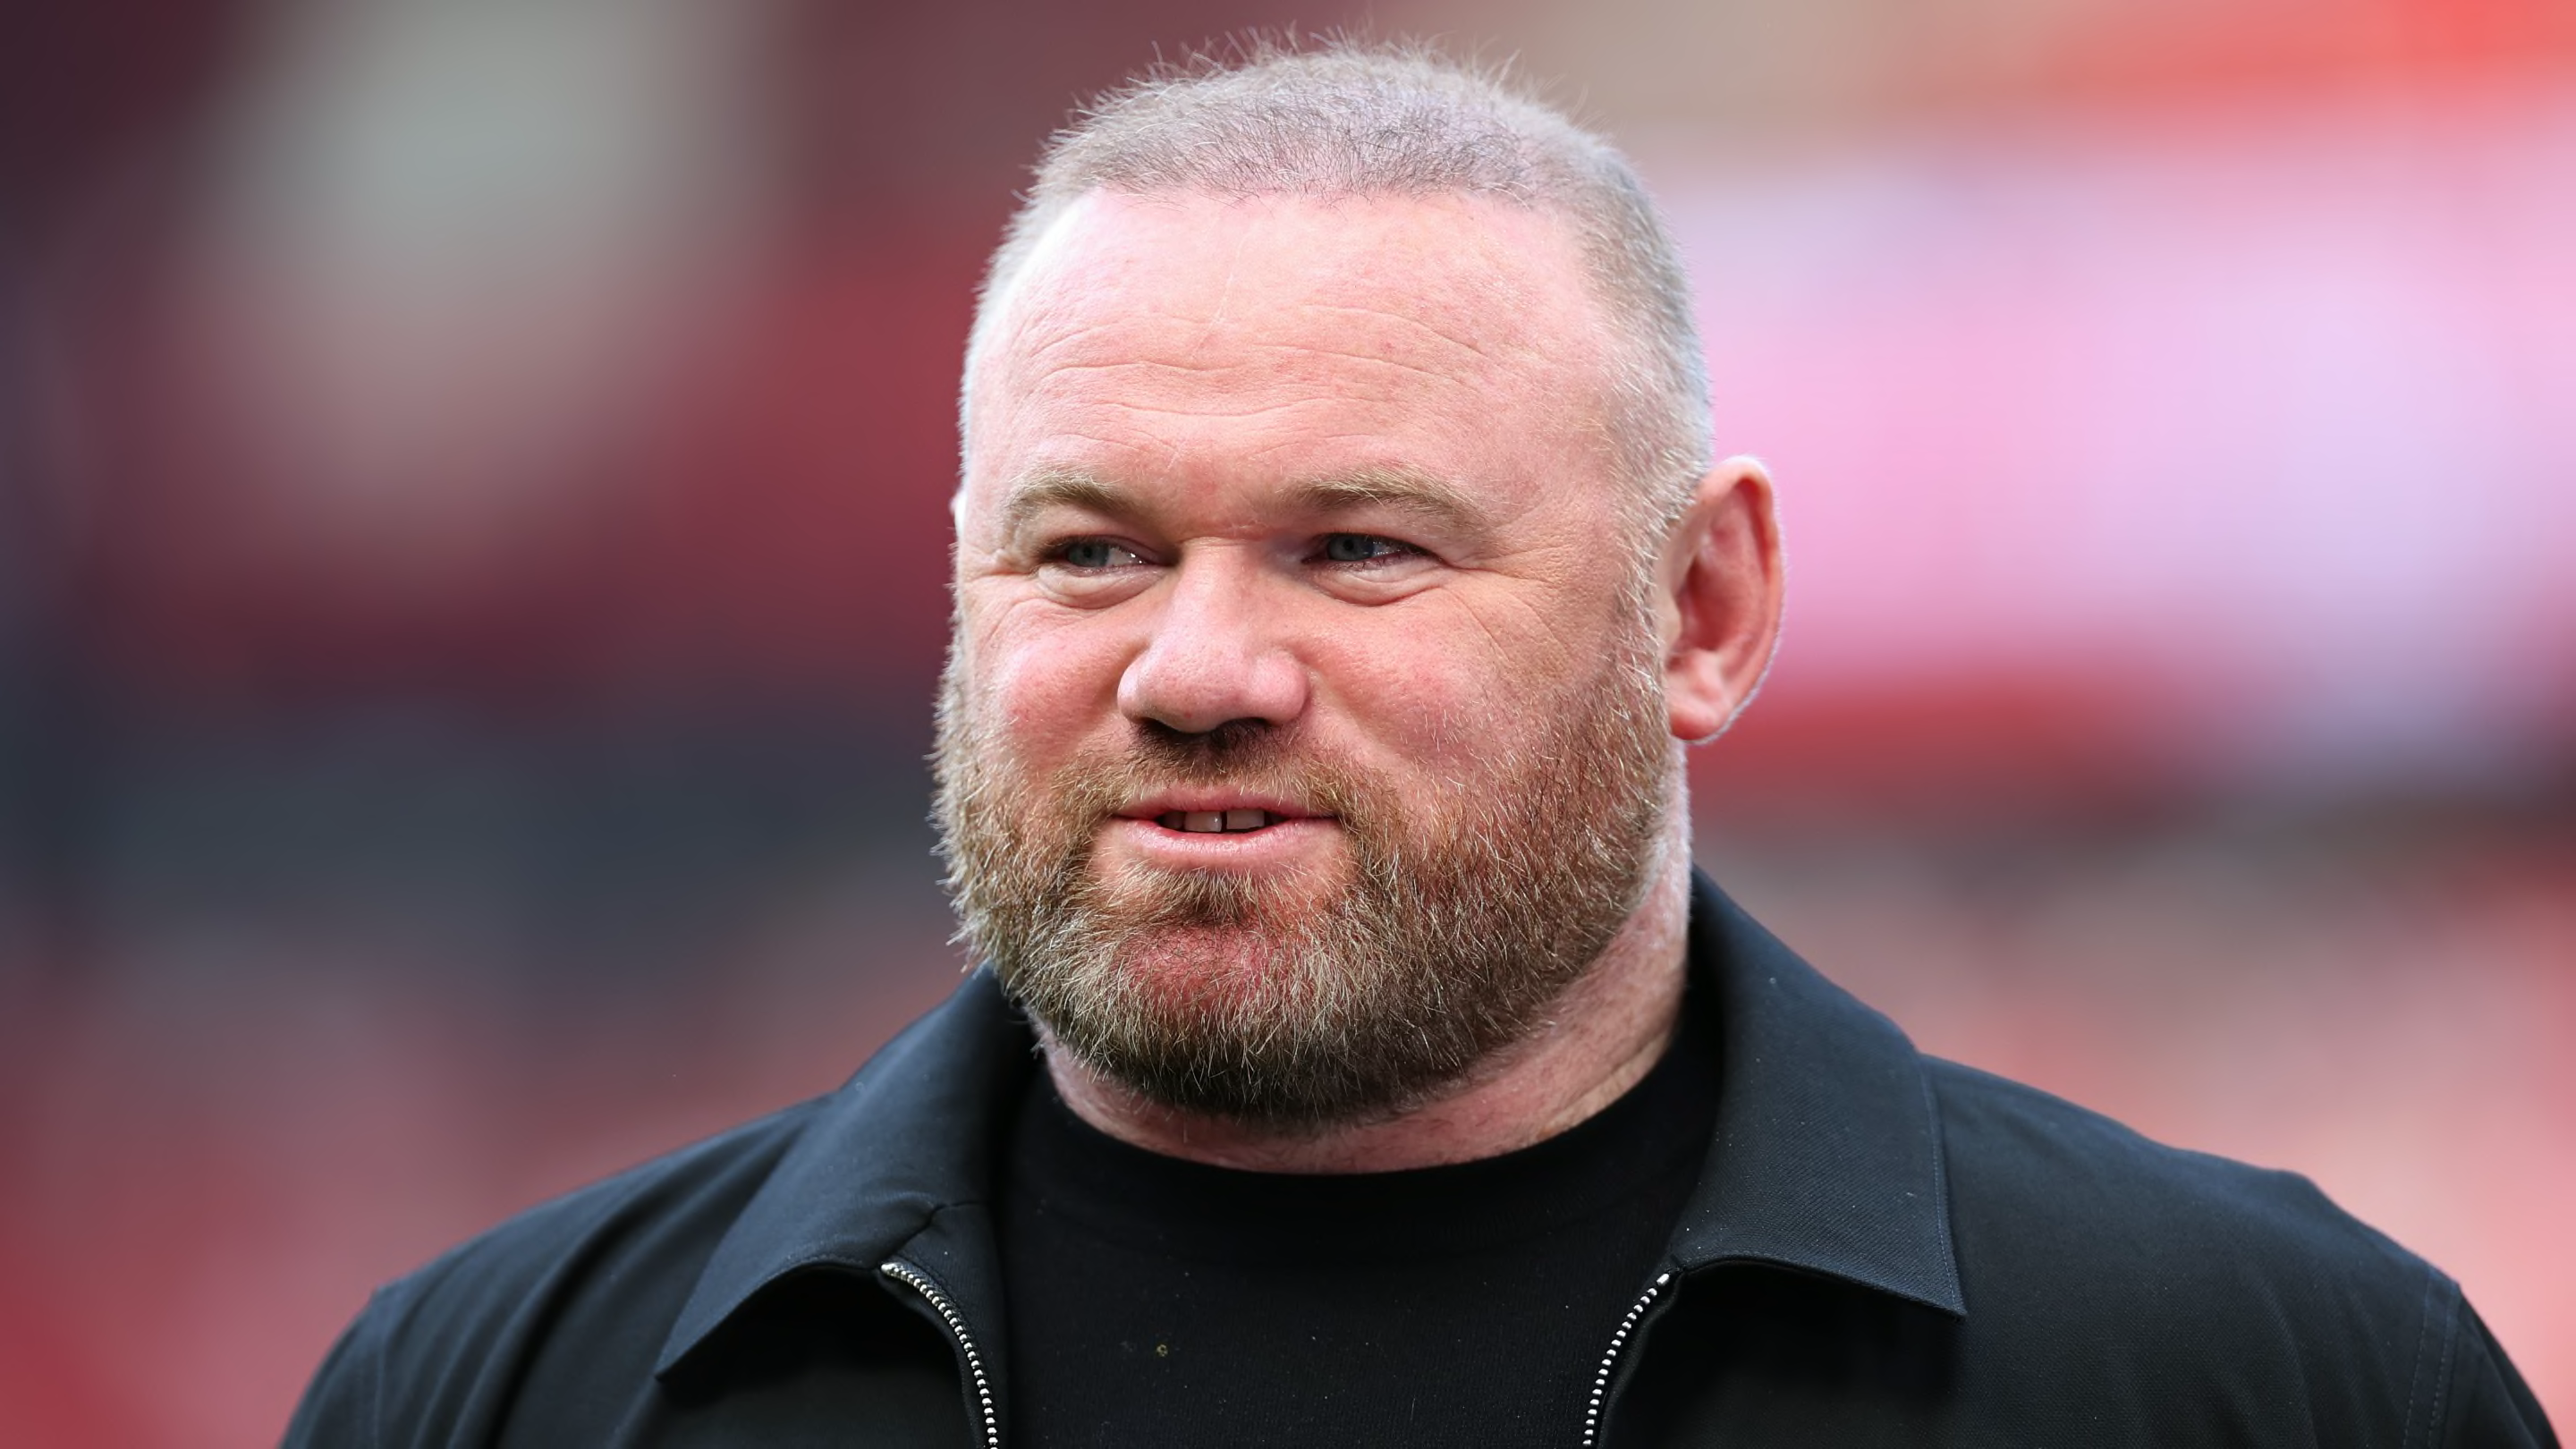 Wayne Rooney lands new manager job after Birmingham exit